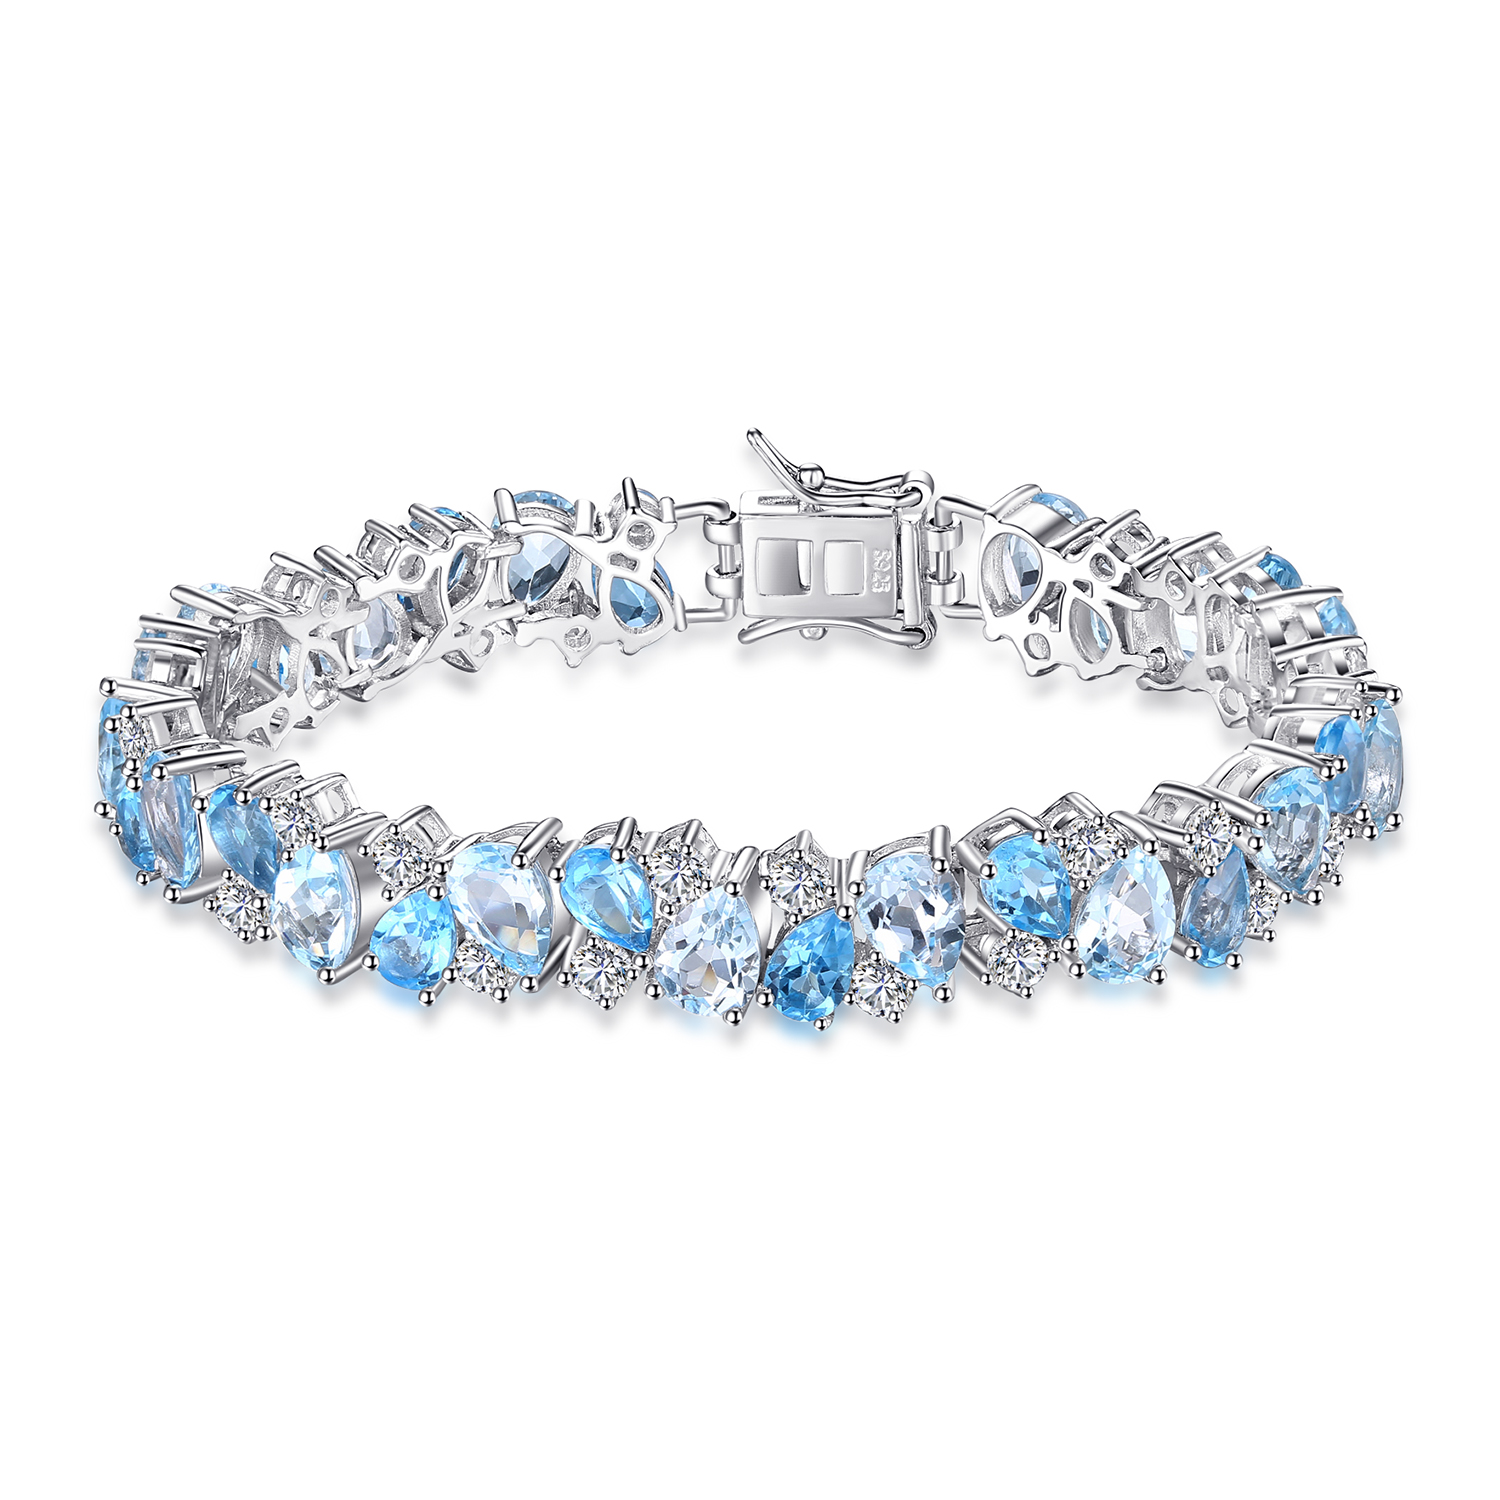 Luxury 23ct Multi Swiss London Blue Topaz Link Tennis Bracelet 925 Sterling Silver JewelryPalace